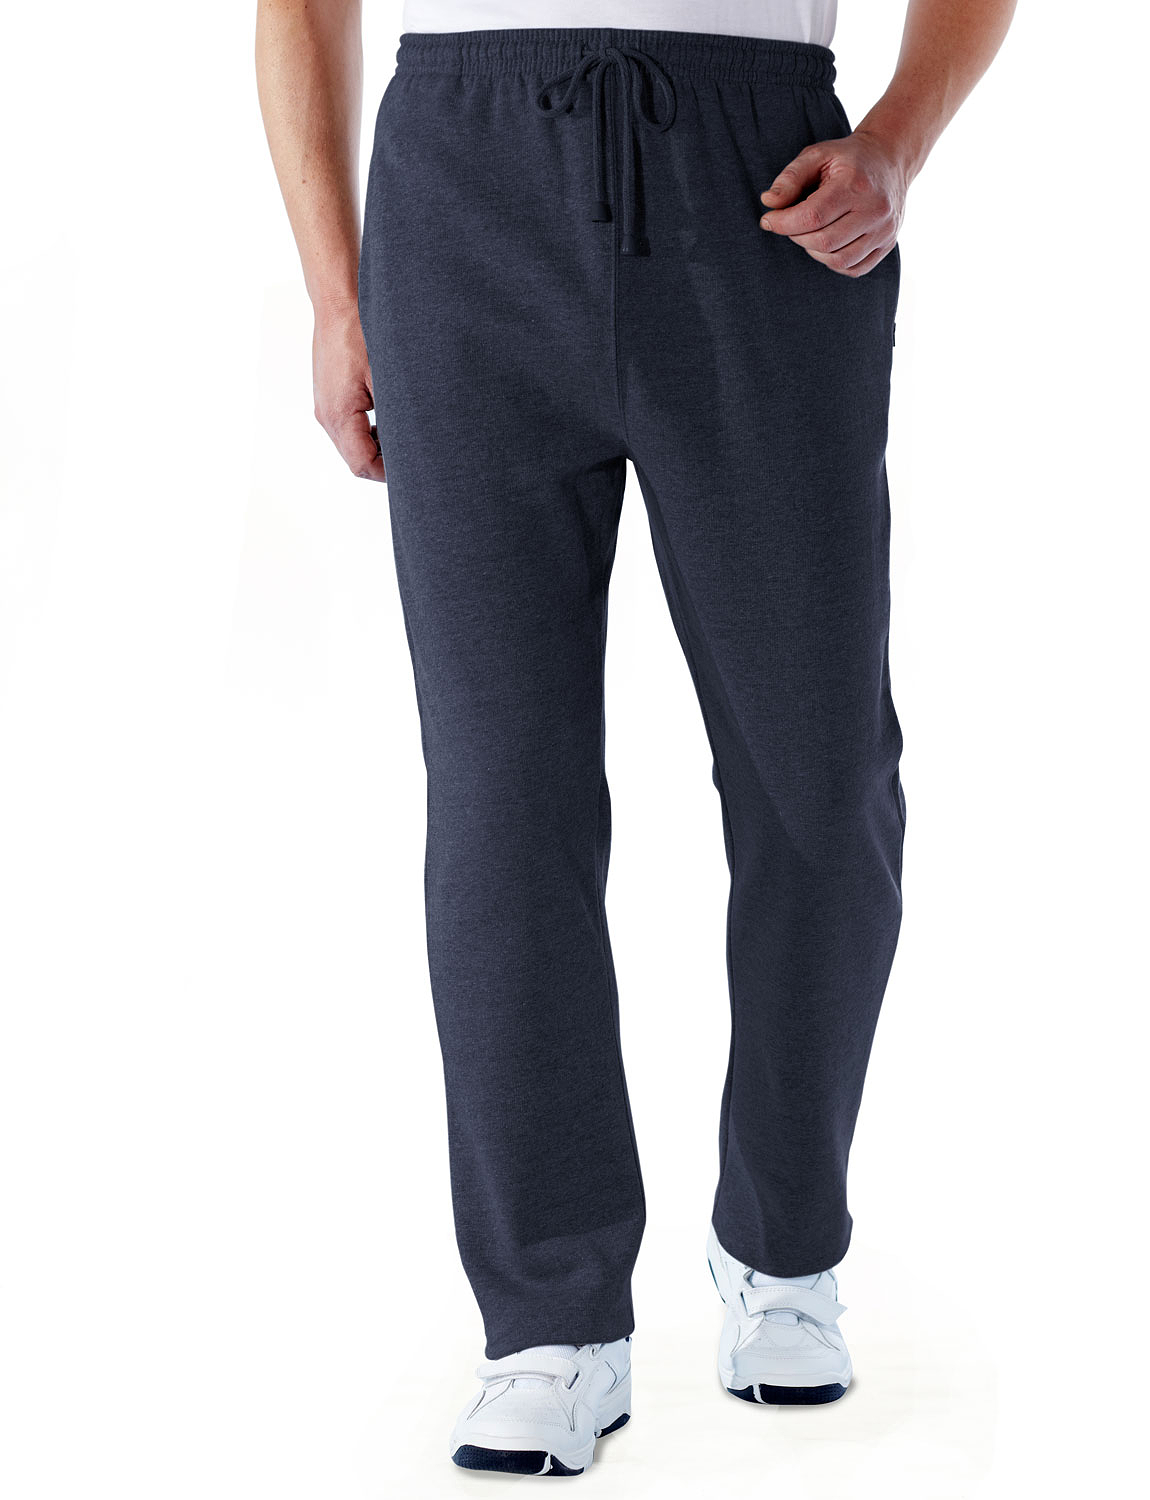 Mens Leisure/Jogging Trousers | eBay